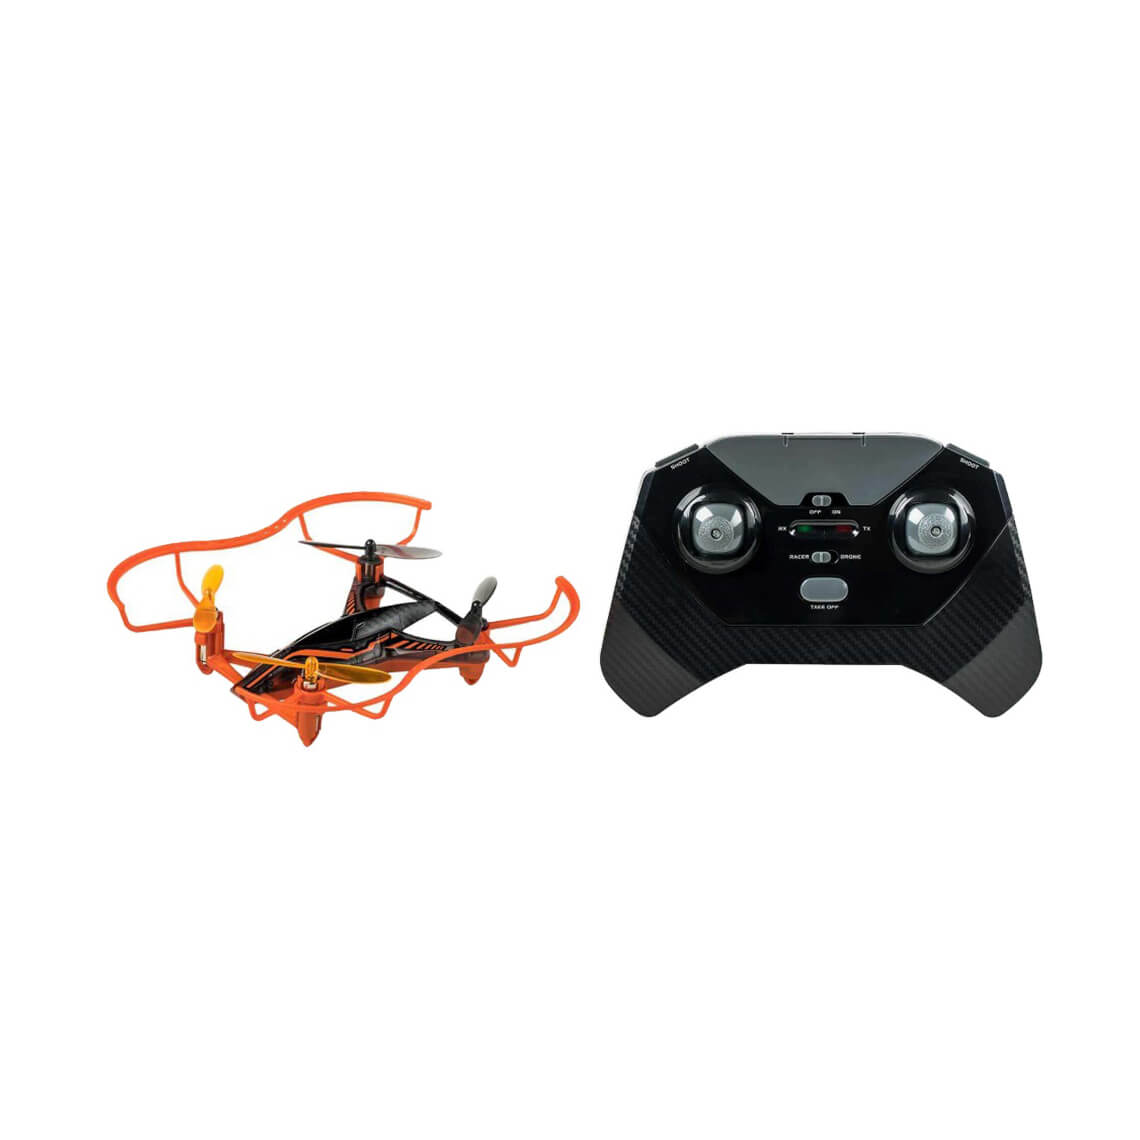 Silverlit Flybotic Foldable Drone req 3 x AAA batteries - Toyworld  Warrnambool